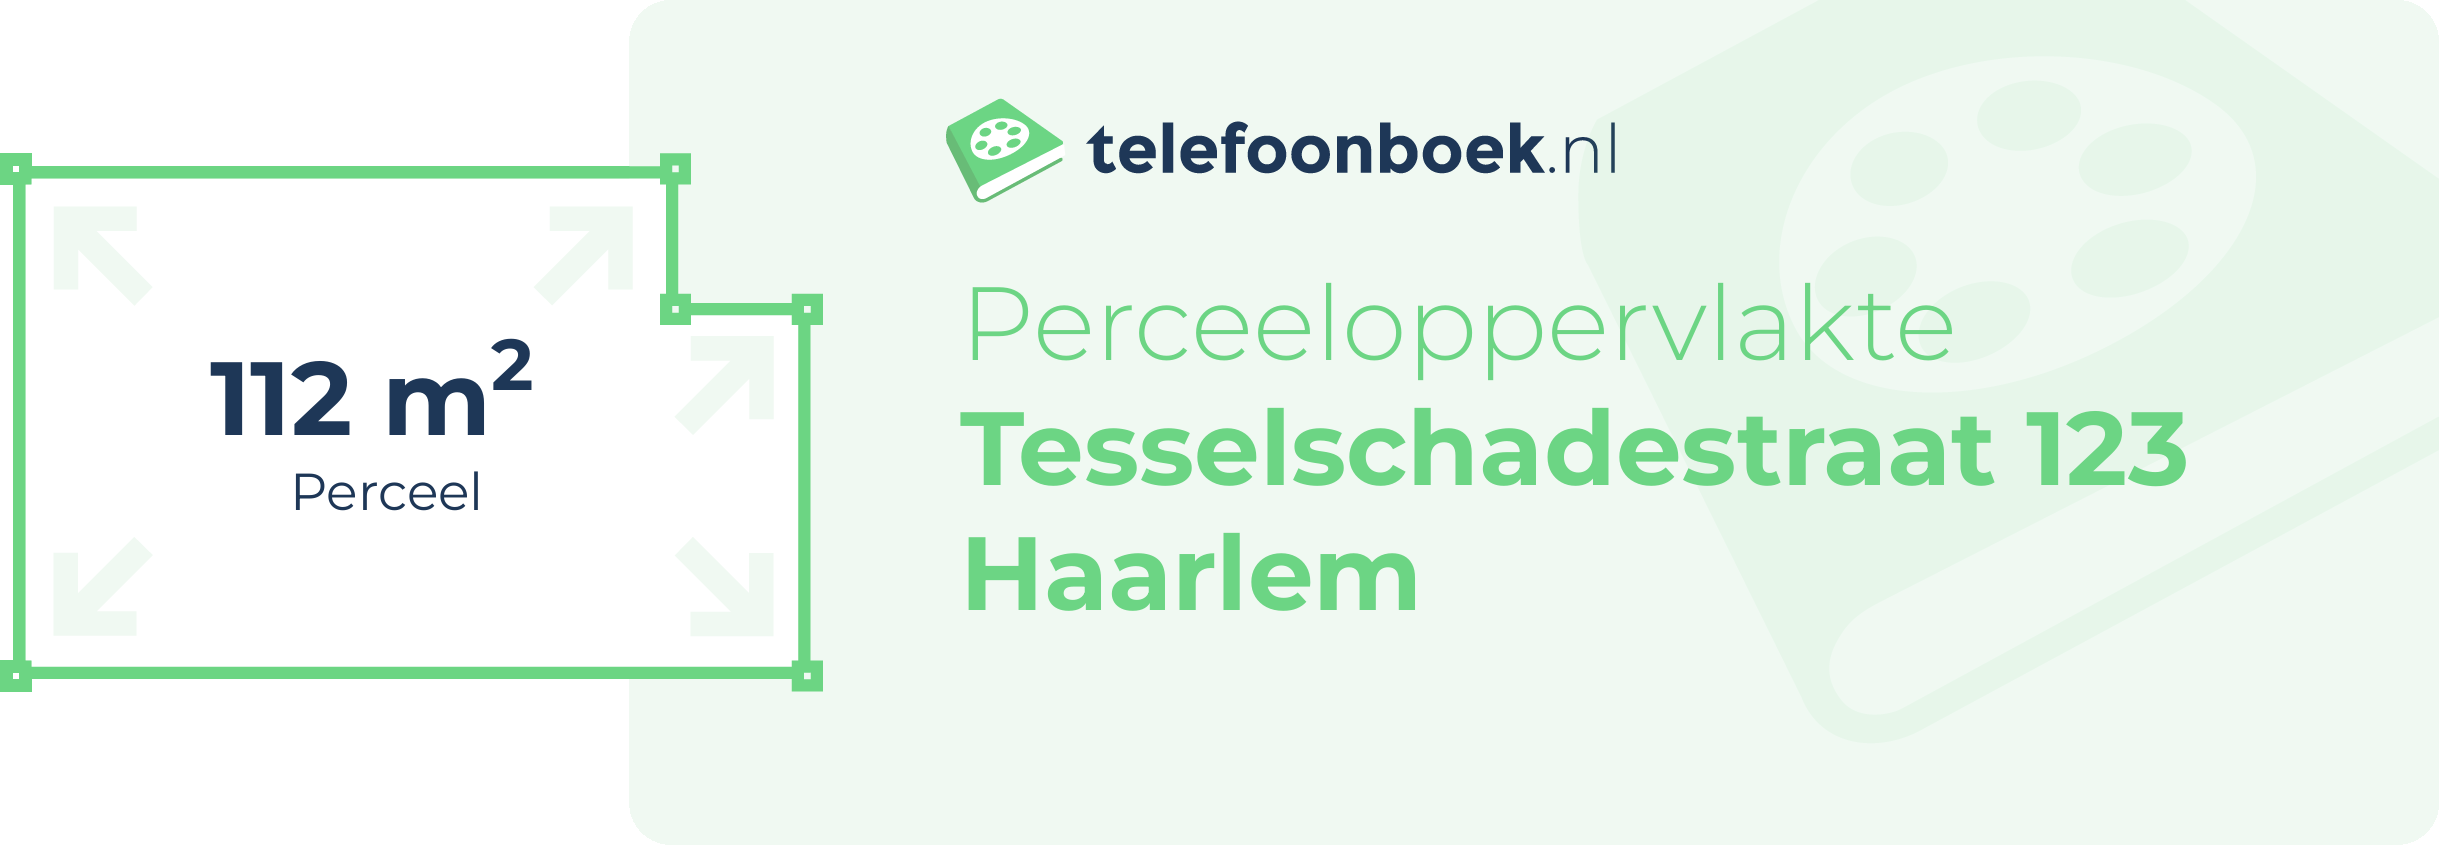 Perceeloppervlakte Tesselschadestraat 123 Haarlem